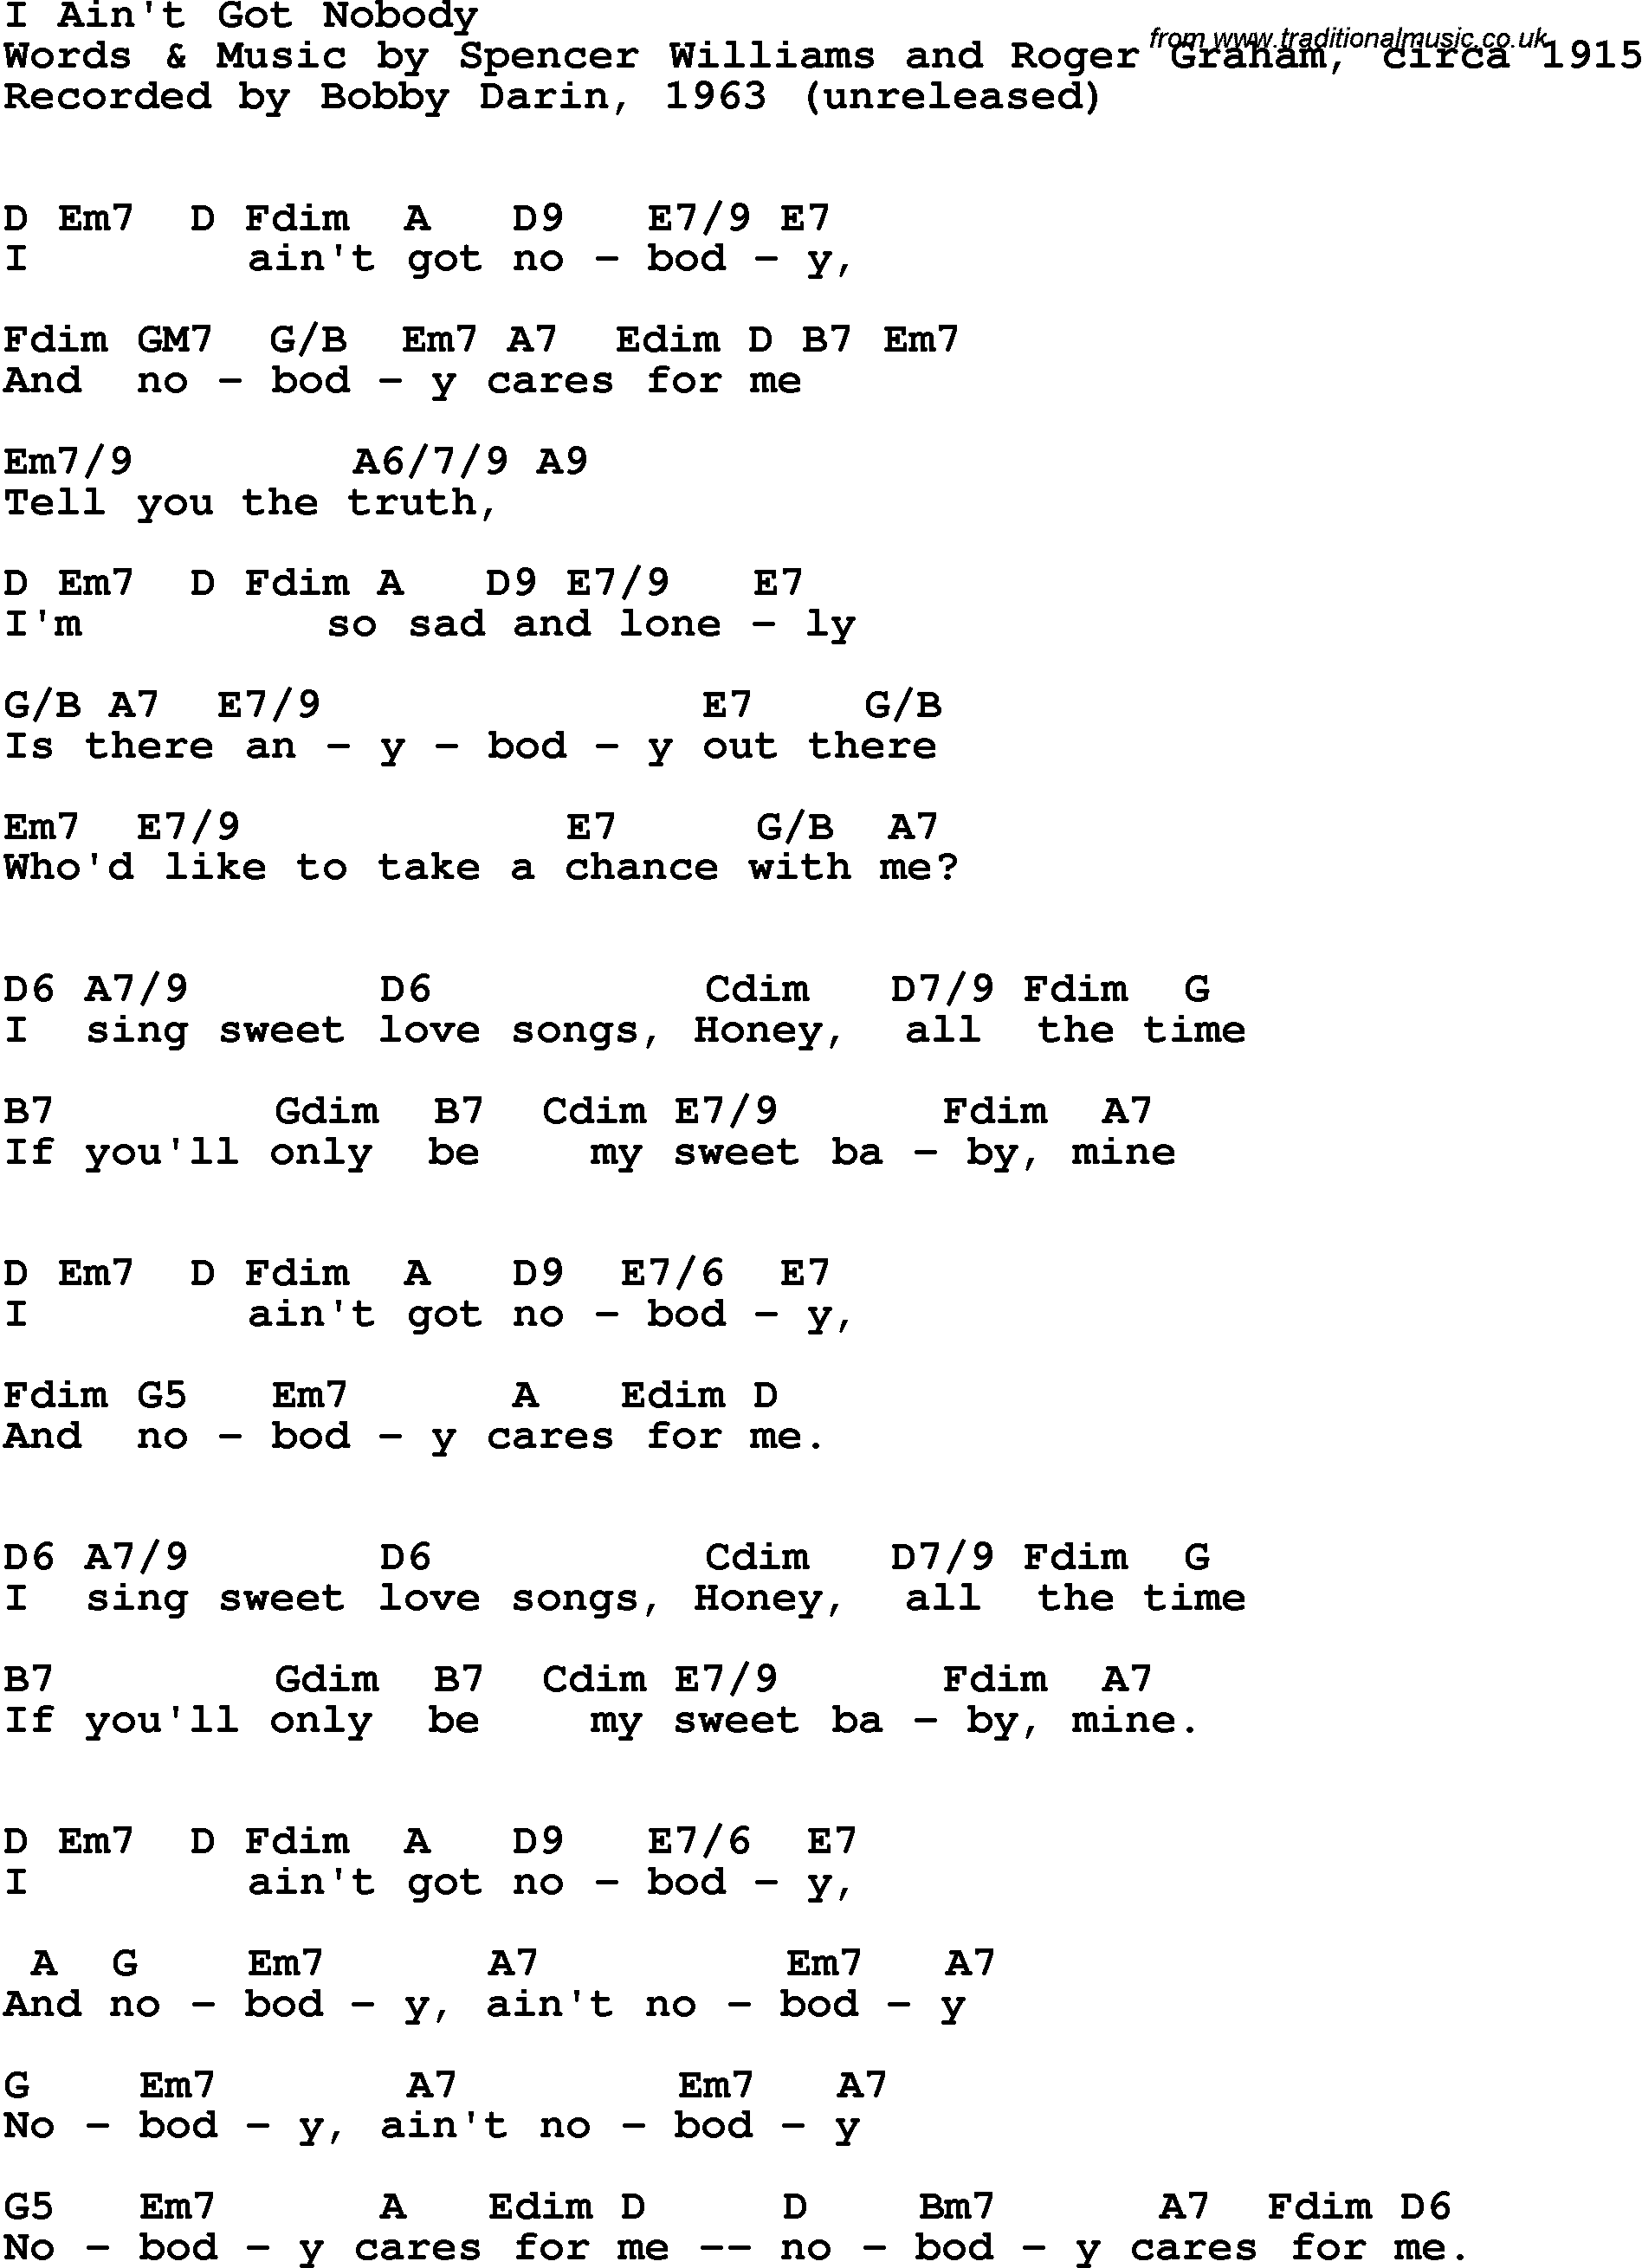 Song Lyrics with guitar chords for I Ain't Got Nobody - Bobby Darin, 1963